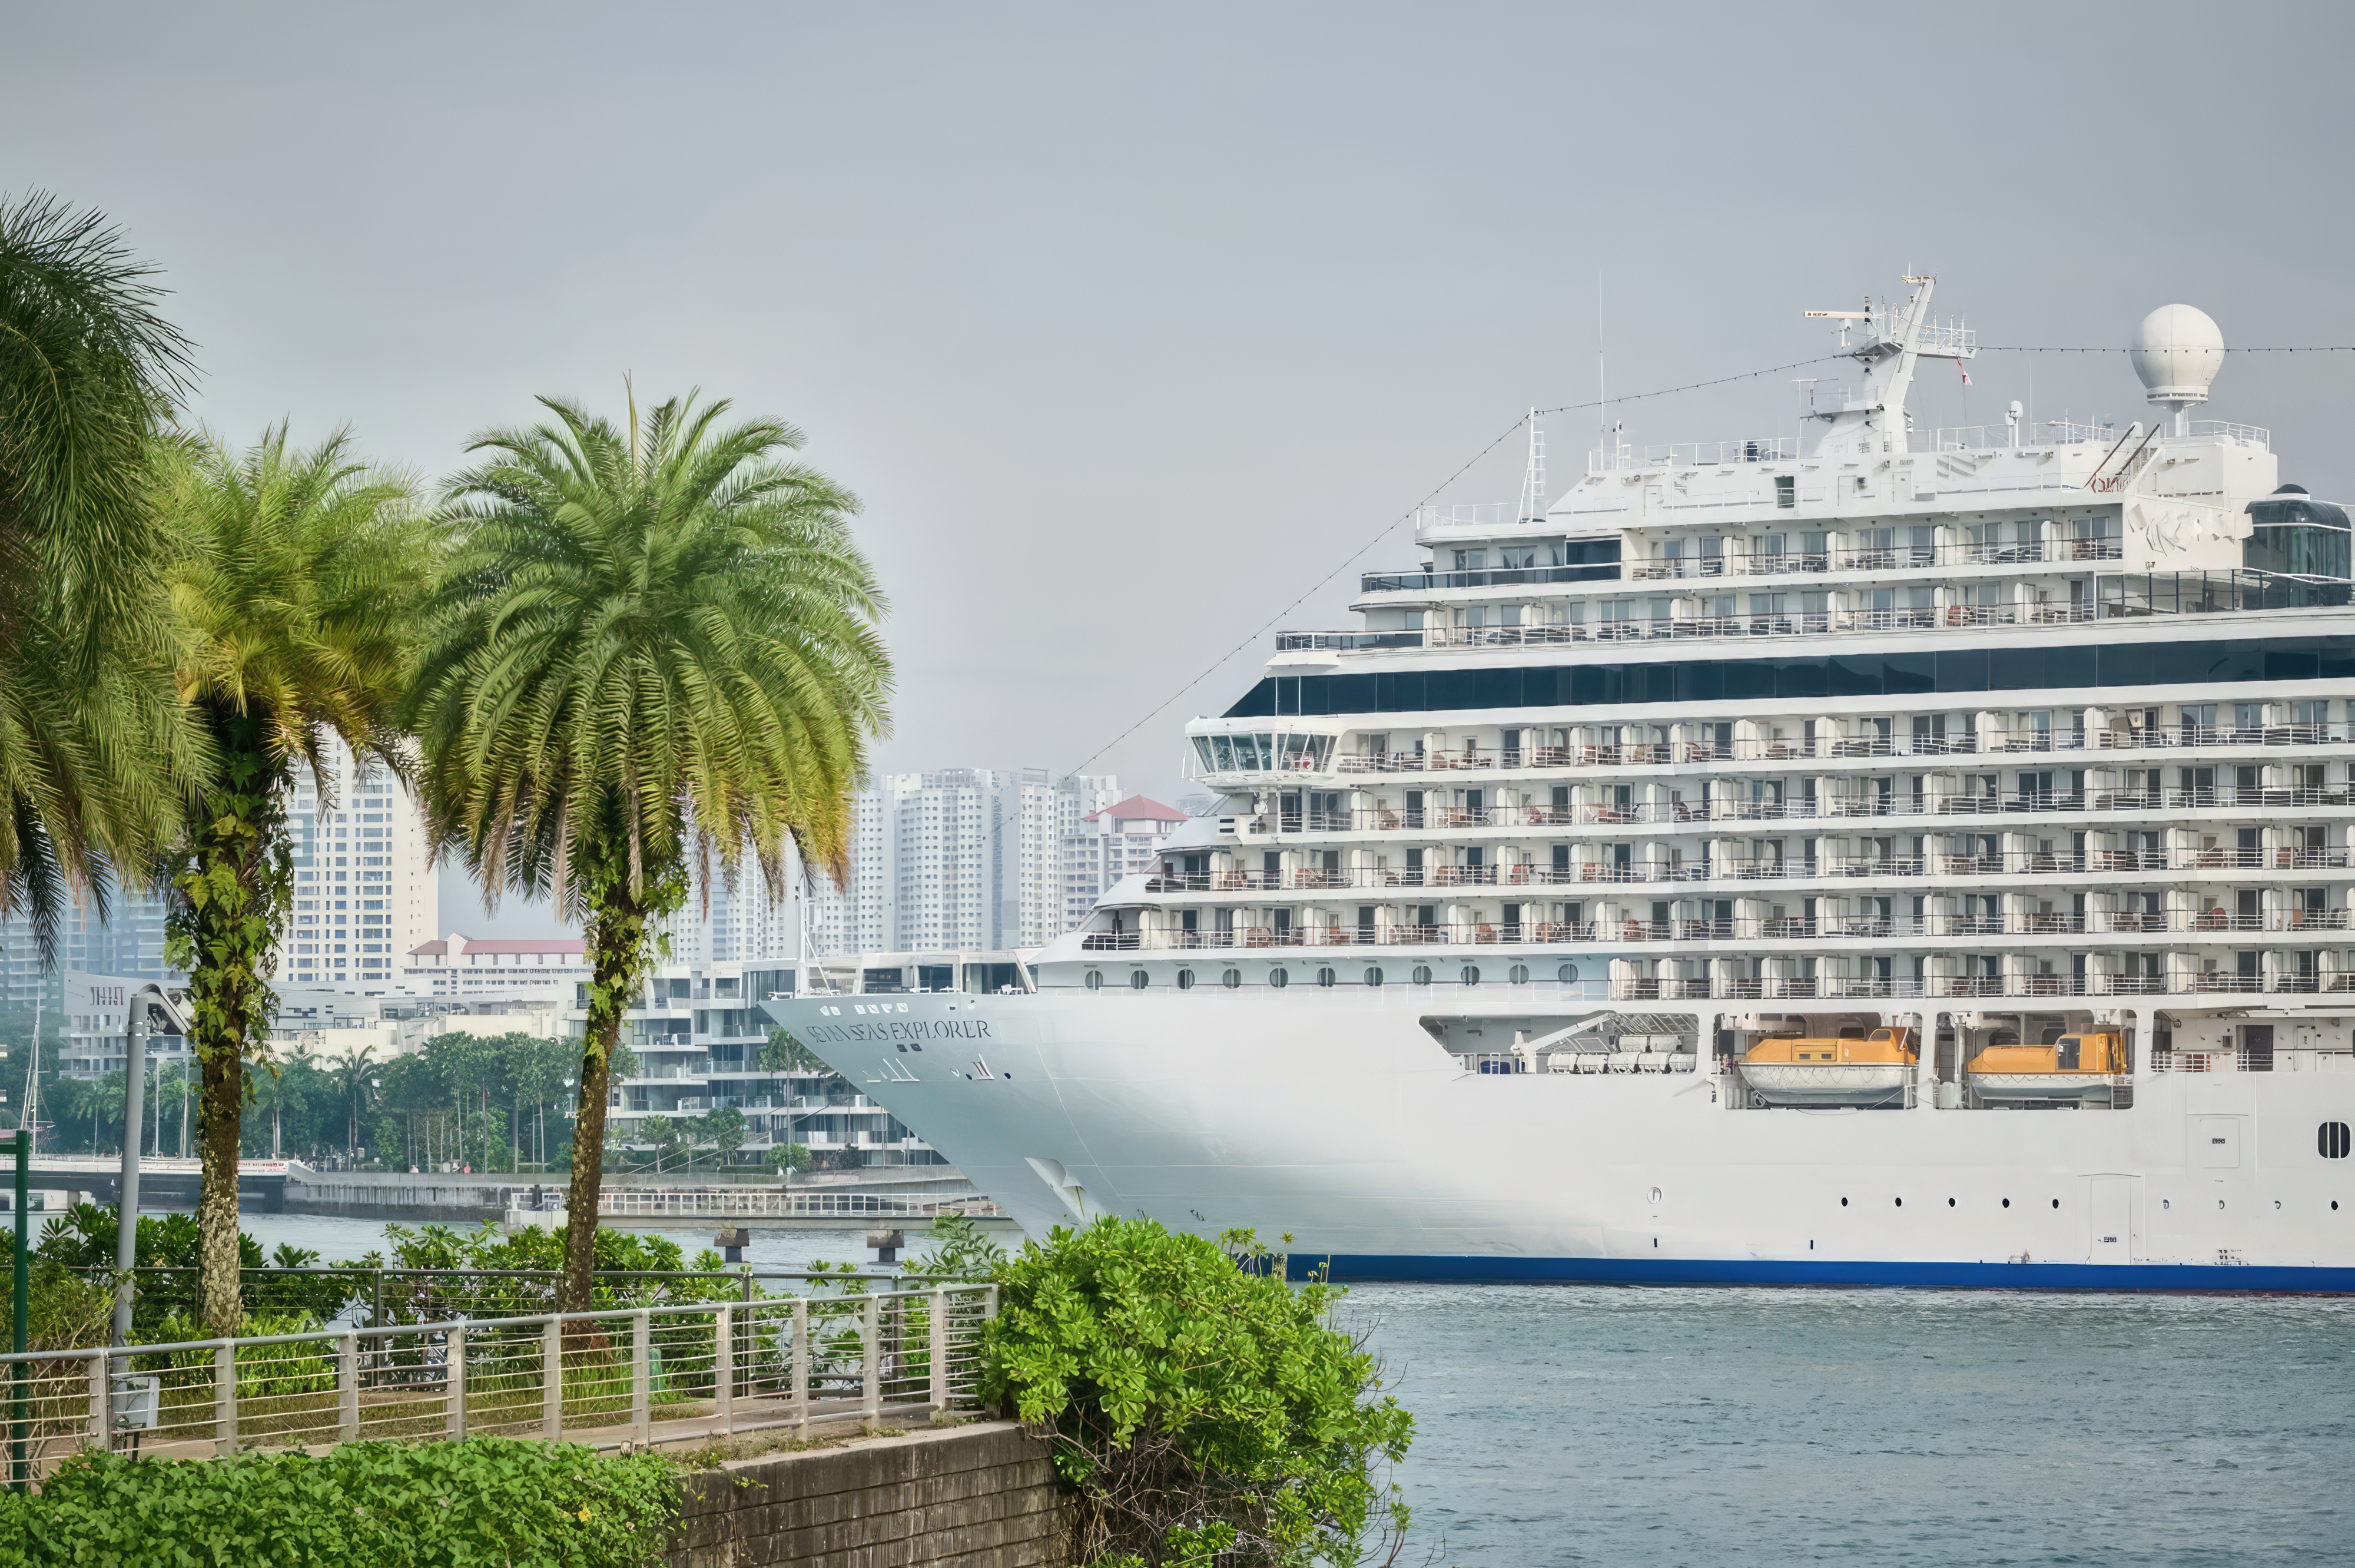 Regent Seven Seas Cruises' Seven Seas Explorer cruise ship has arrived in Singapore